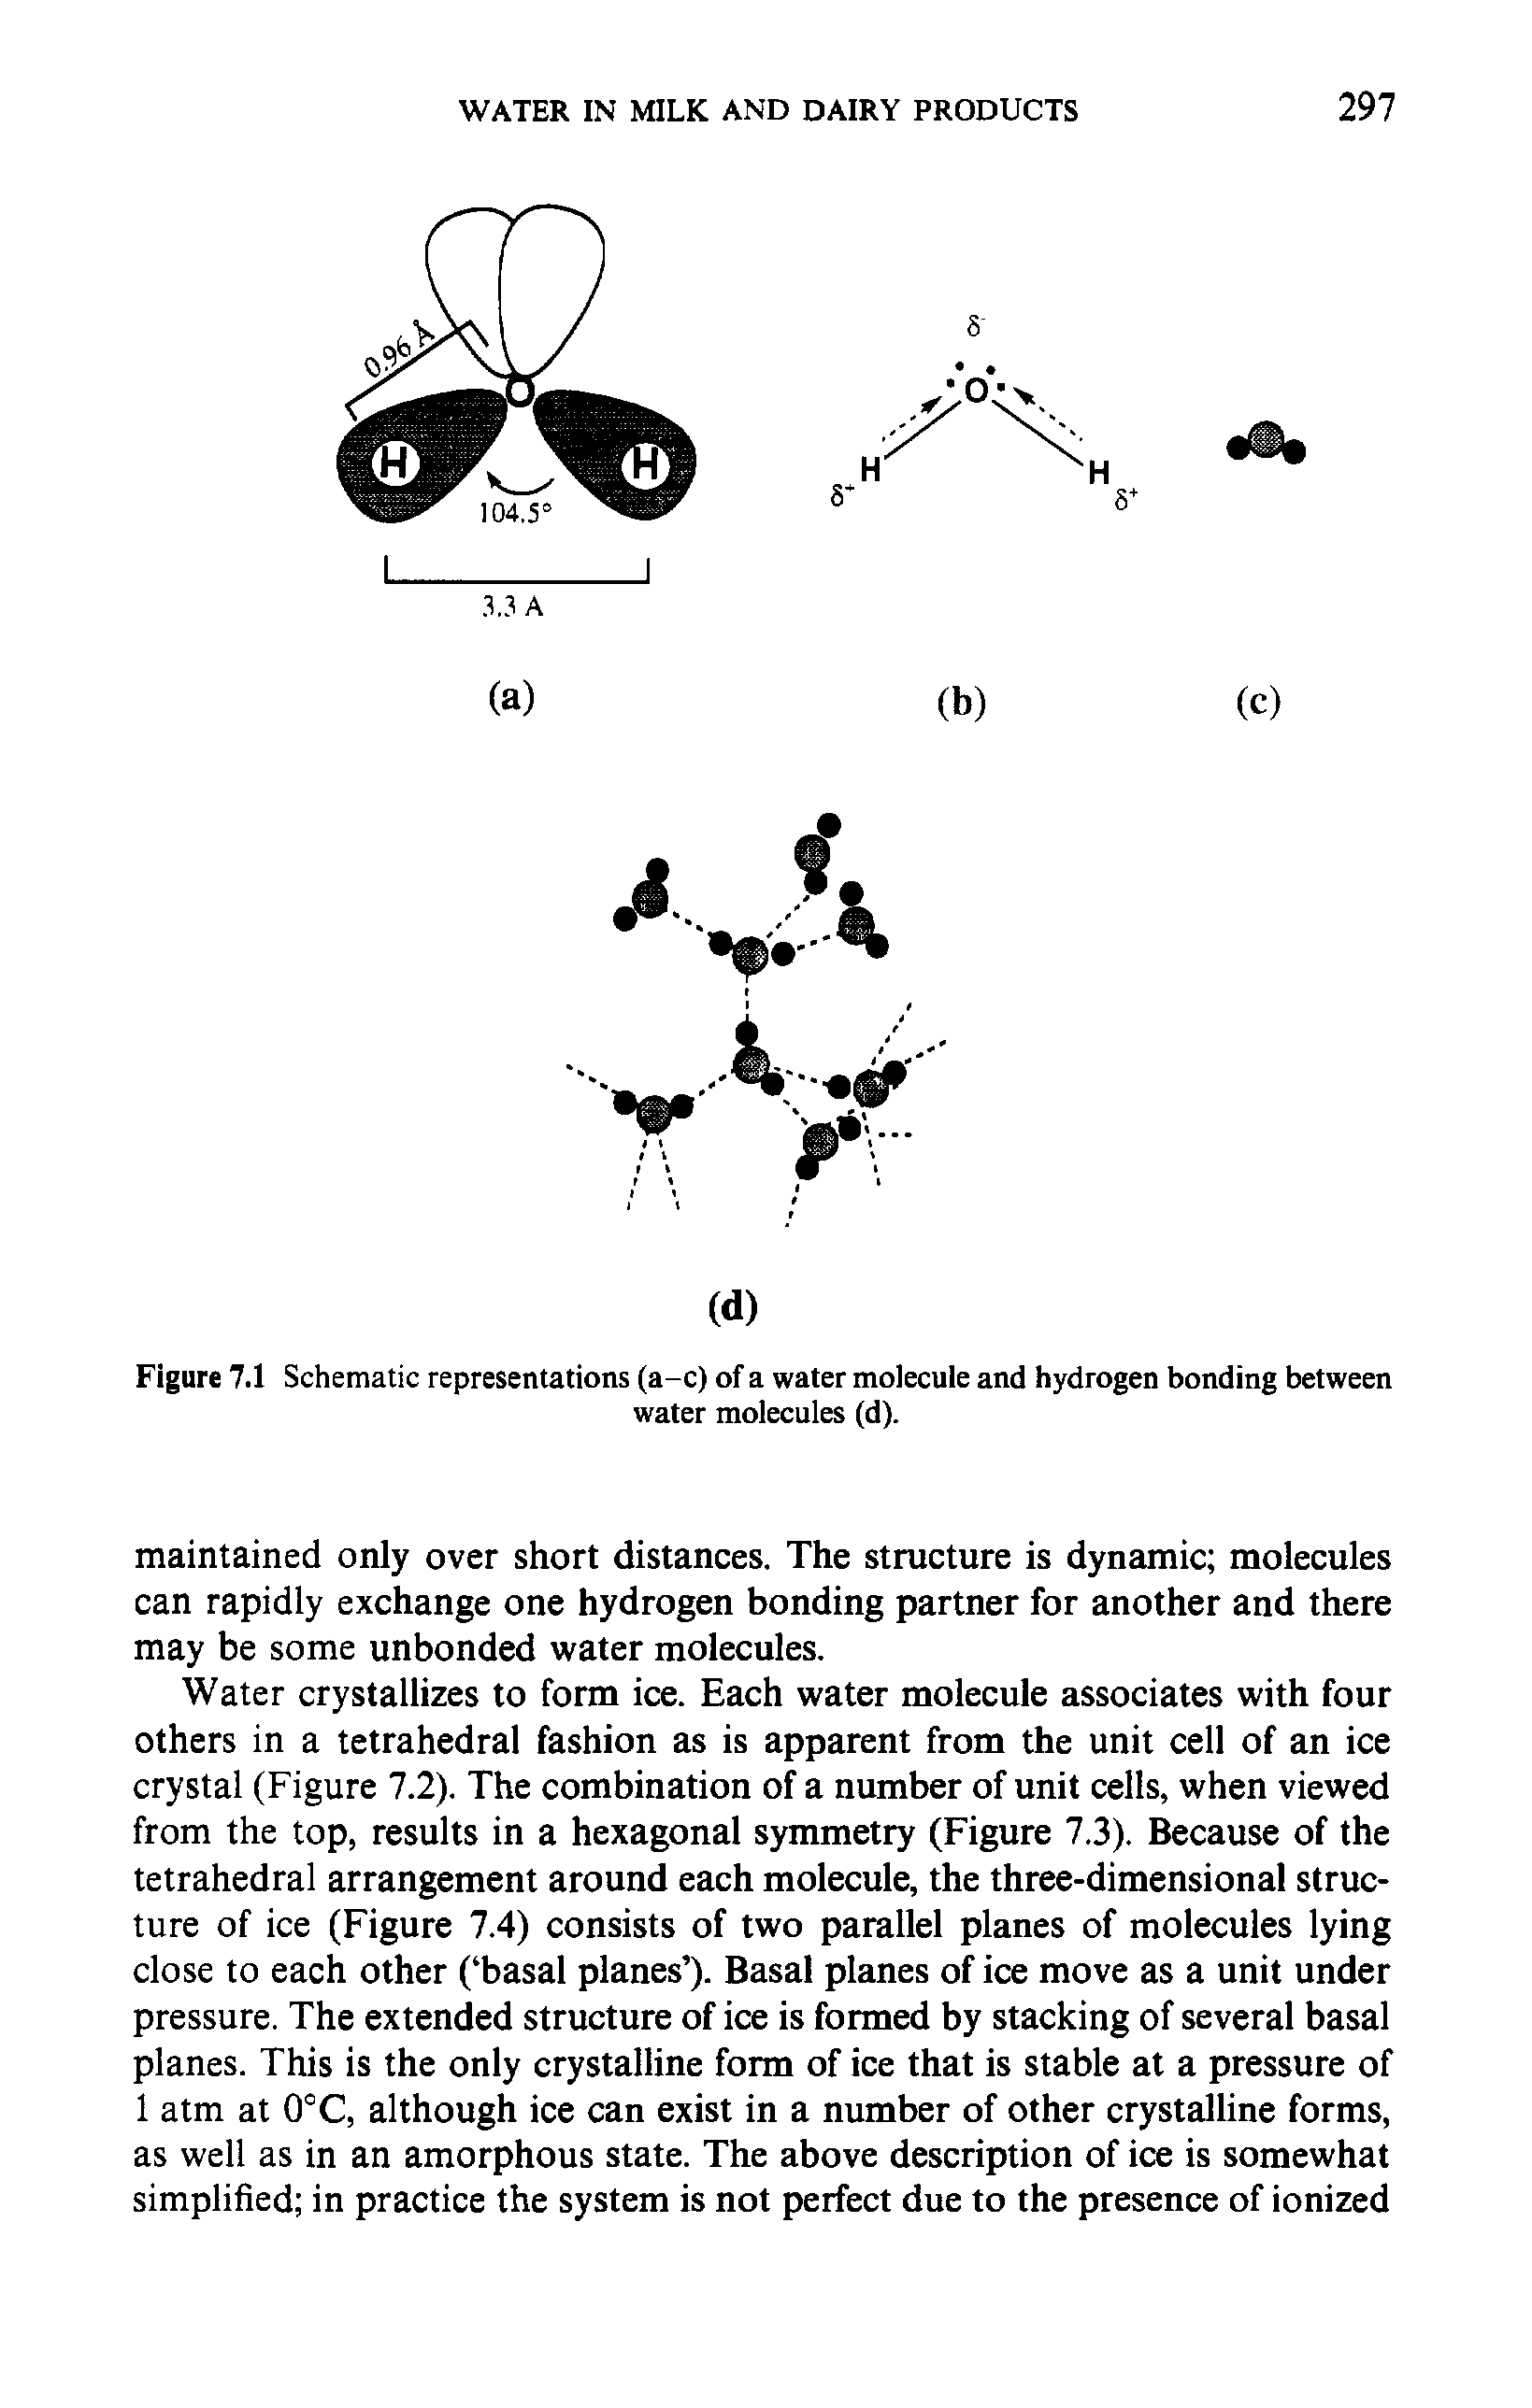 Figure 7.1 Schematic representations (a-c) of a water molecule and hydrogen bonding between...